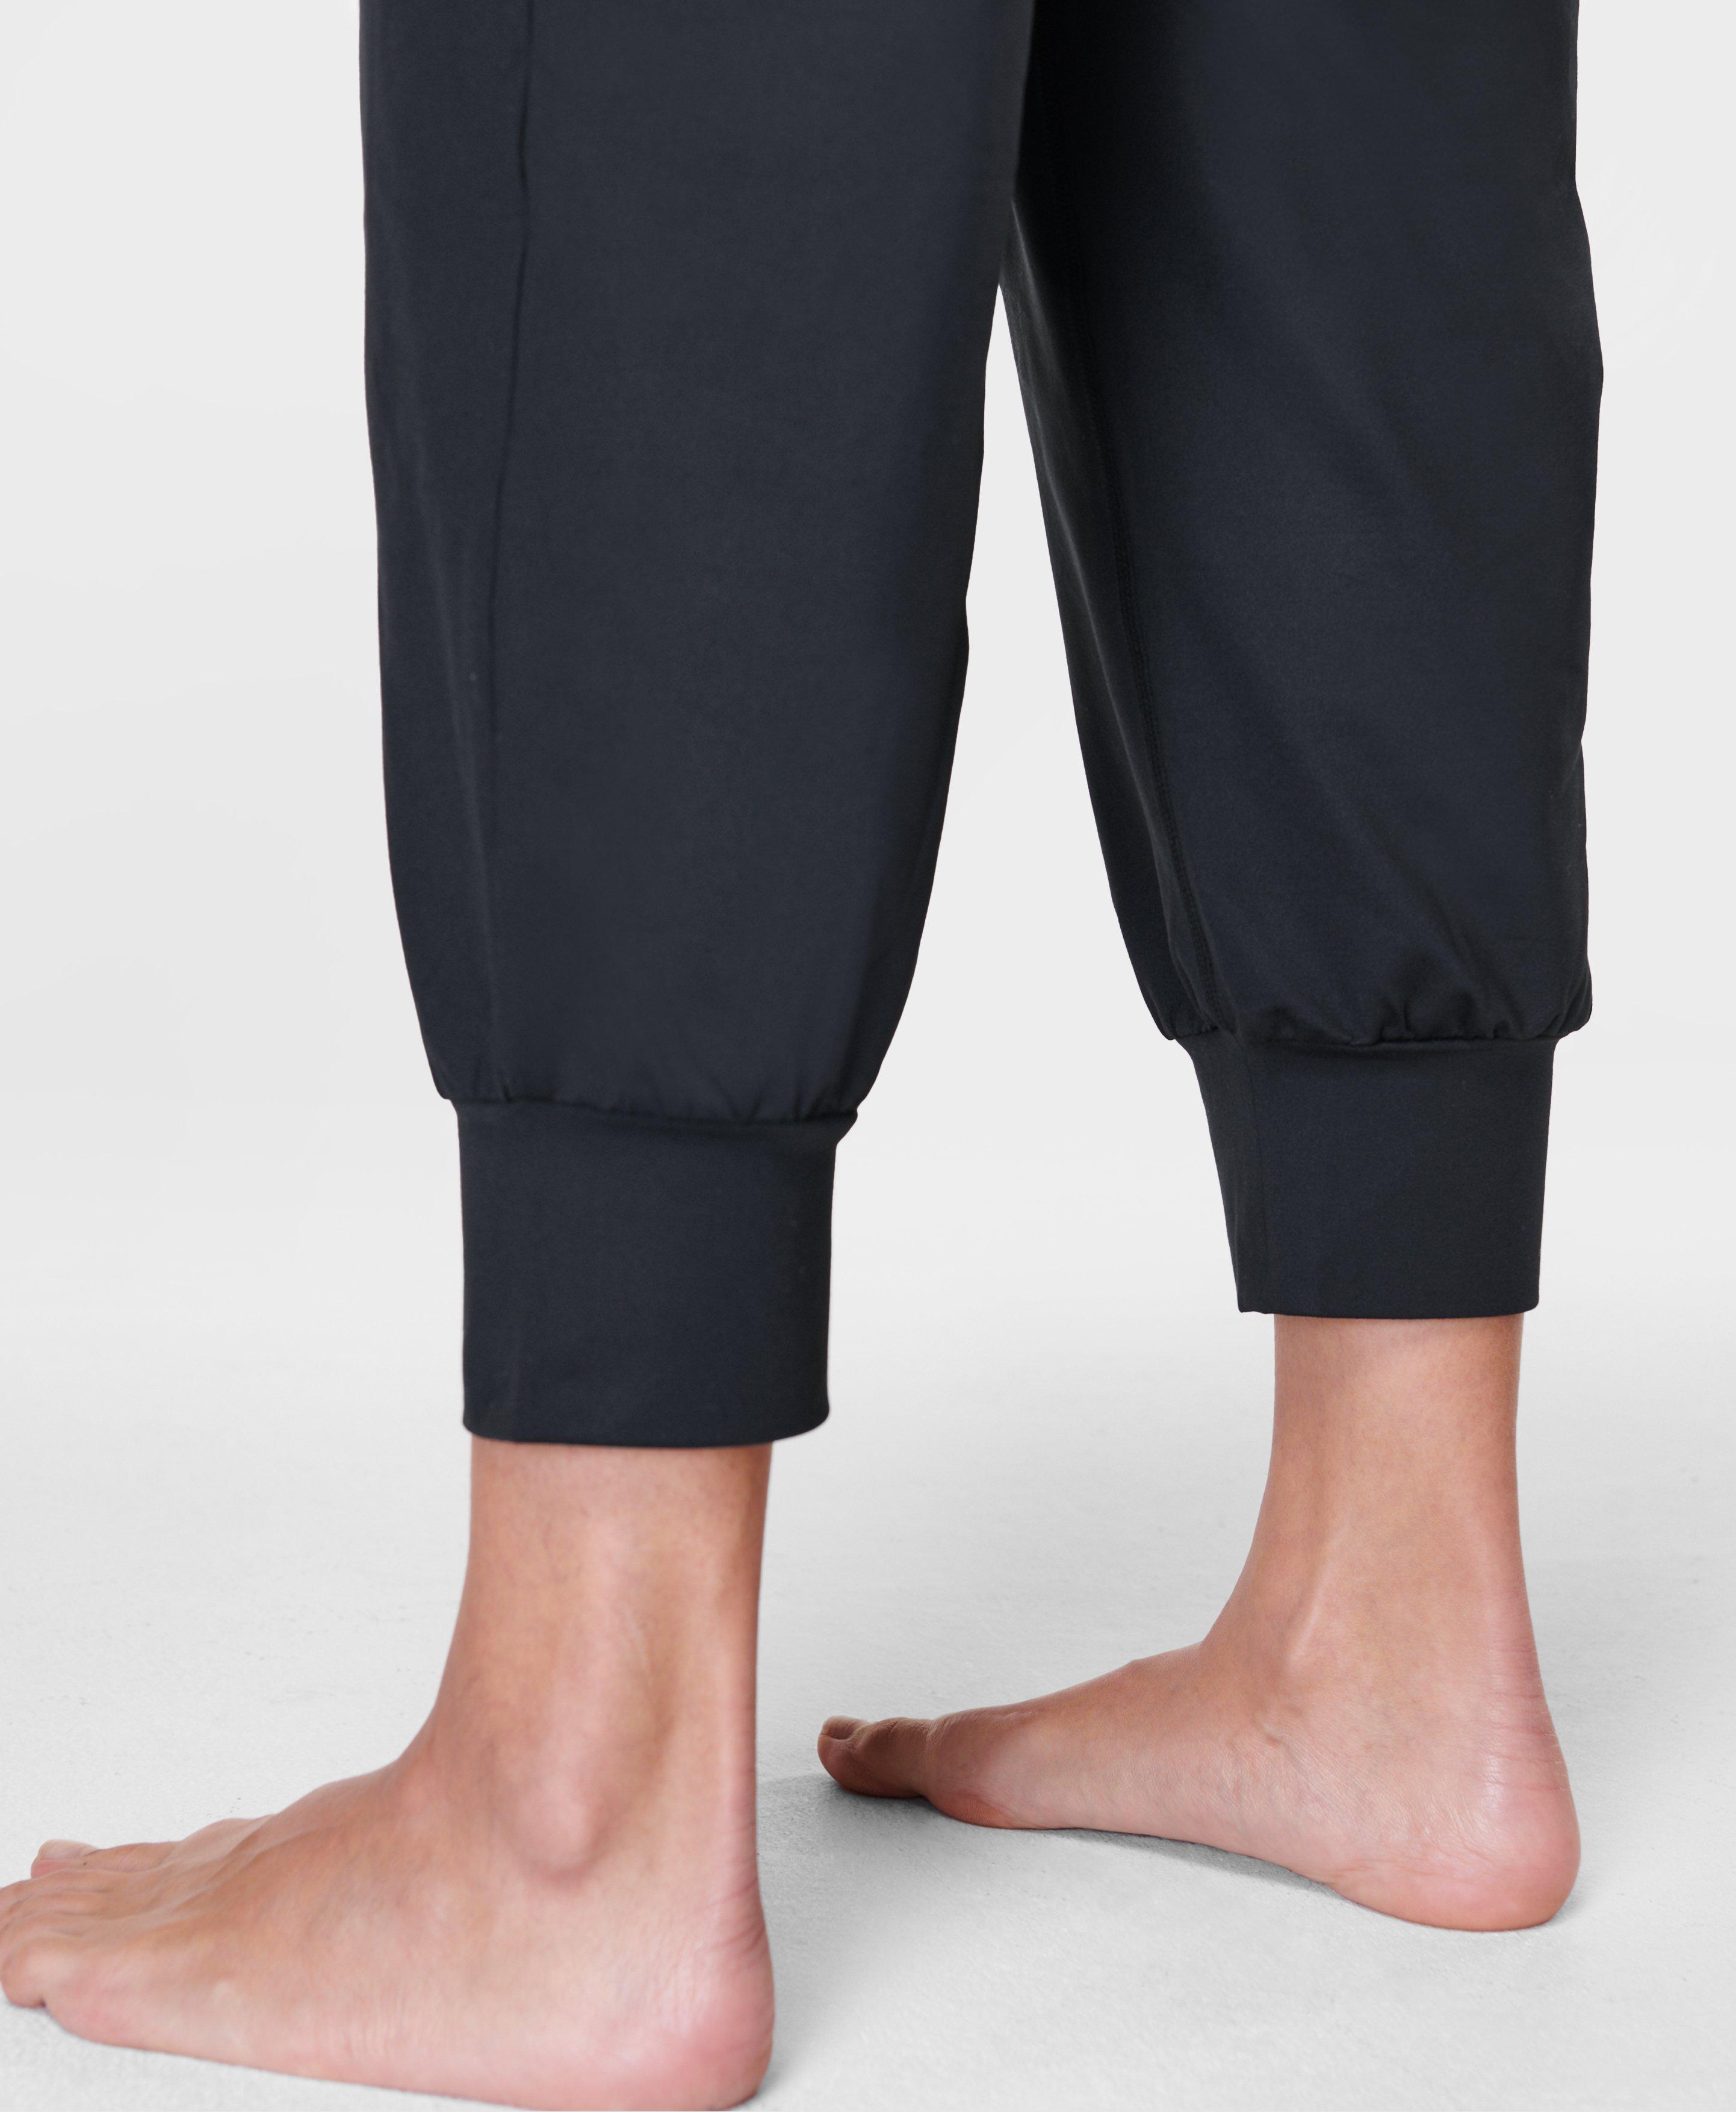 Gaia Yoga Capri Pants - Black, Women's Pants